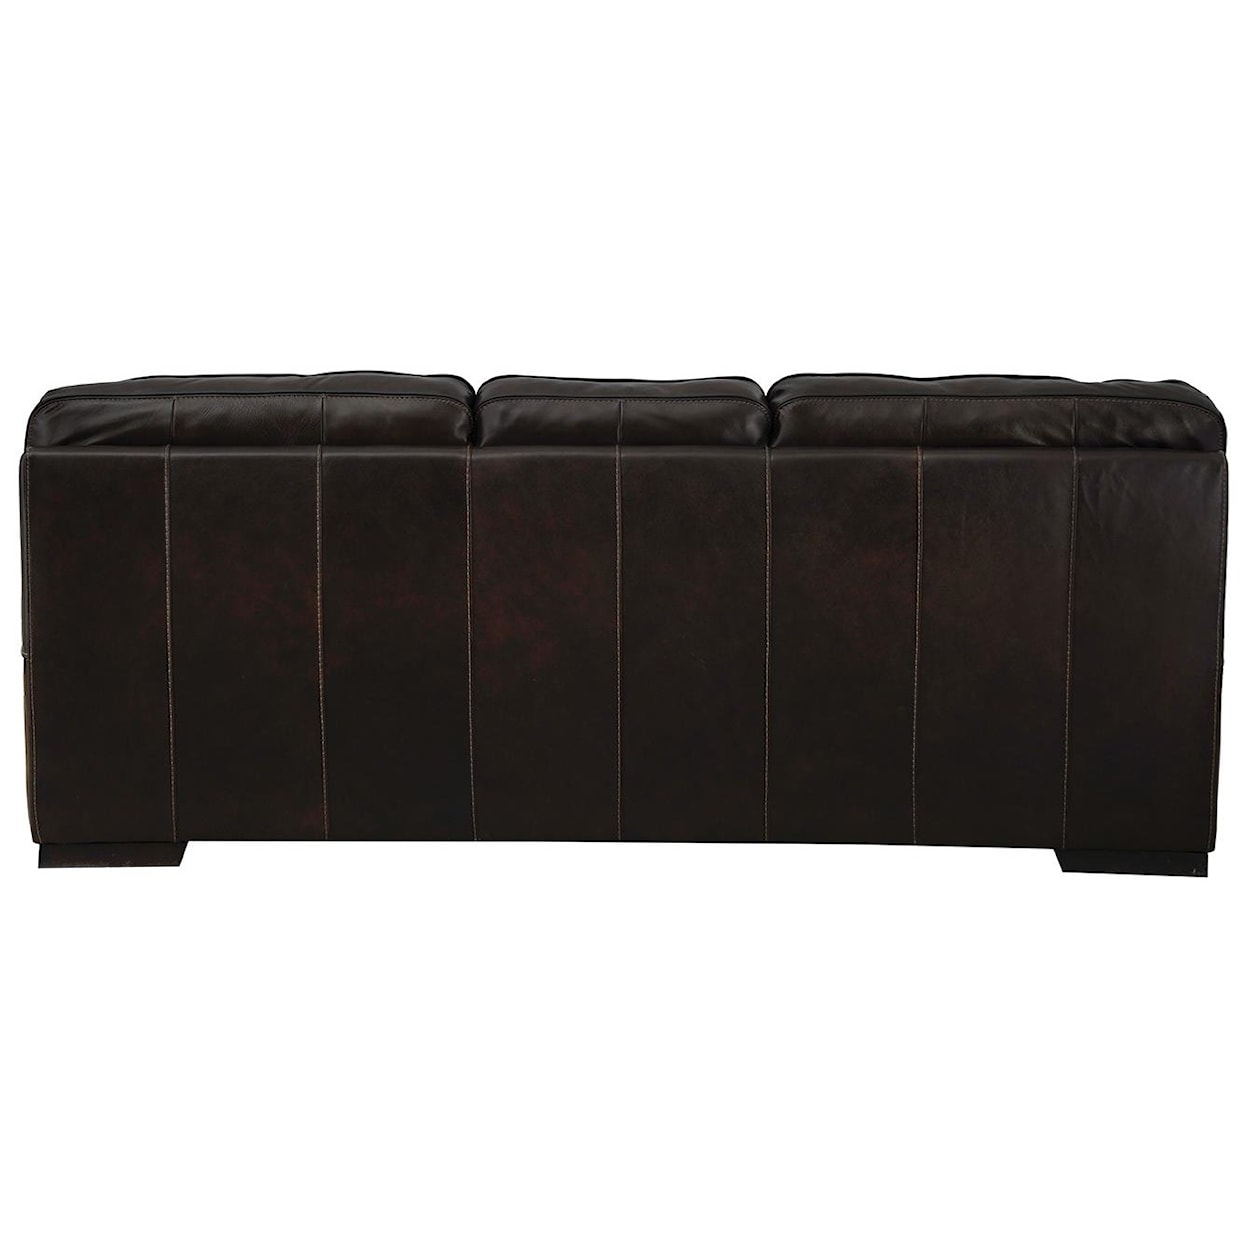 Simon Li J490 Leather Sofa